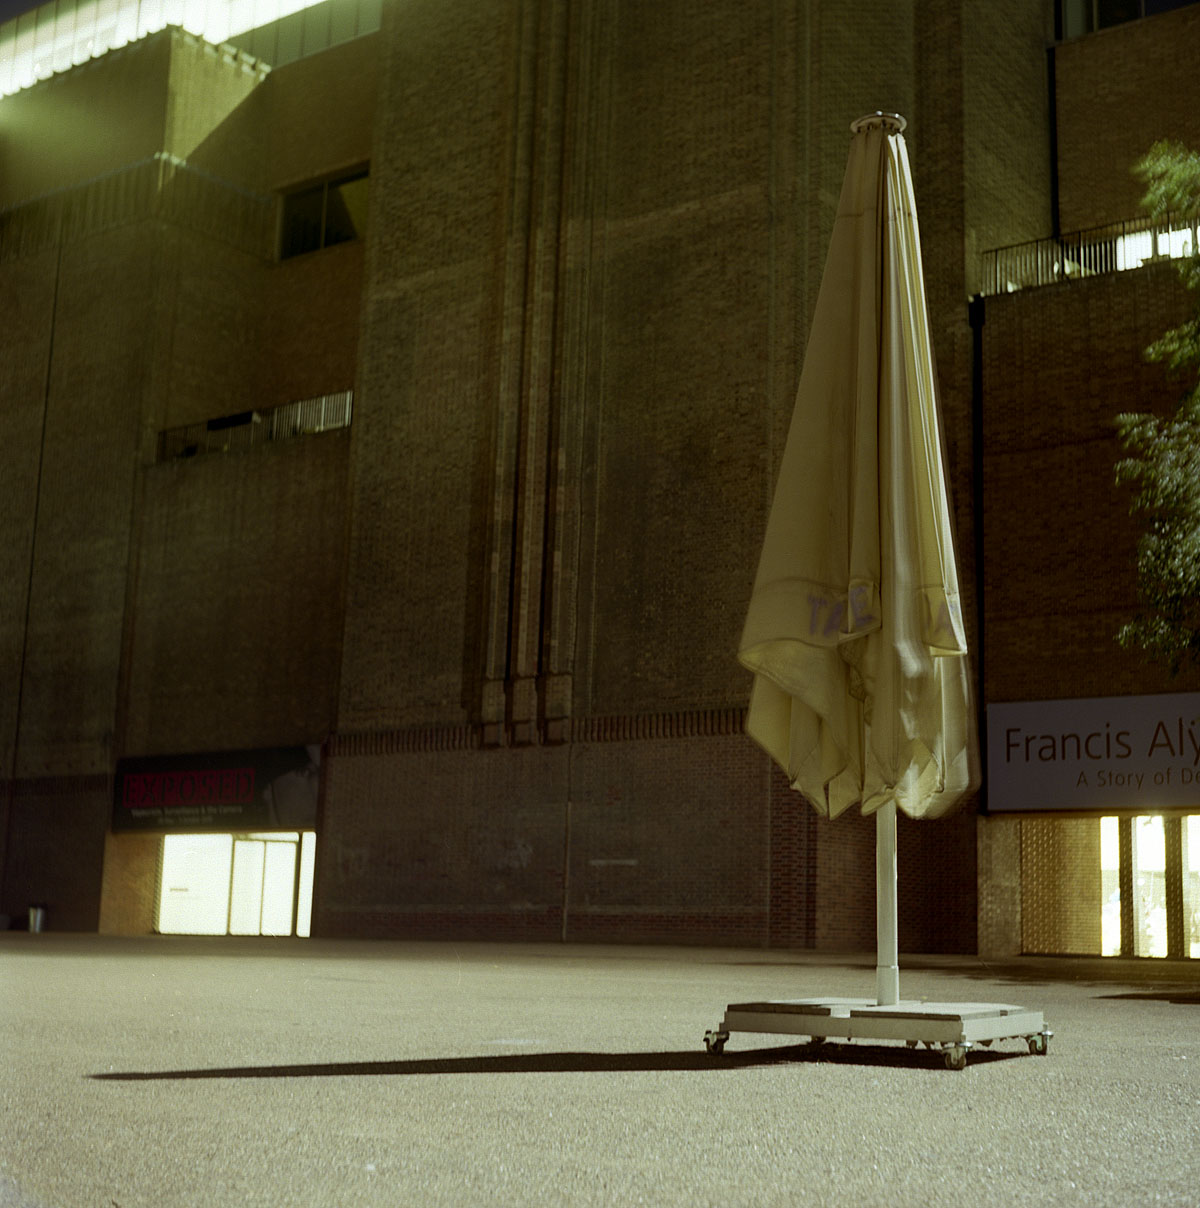 fotka / image Tate Modern, Night in London